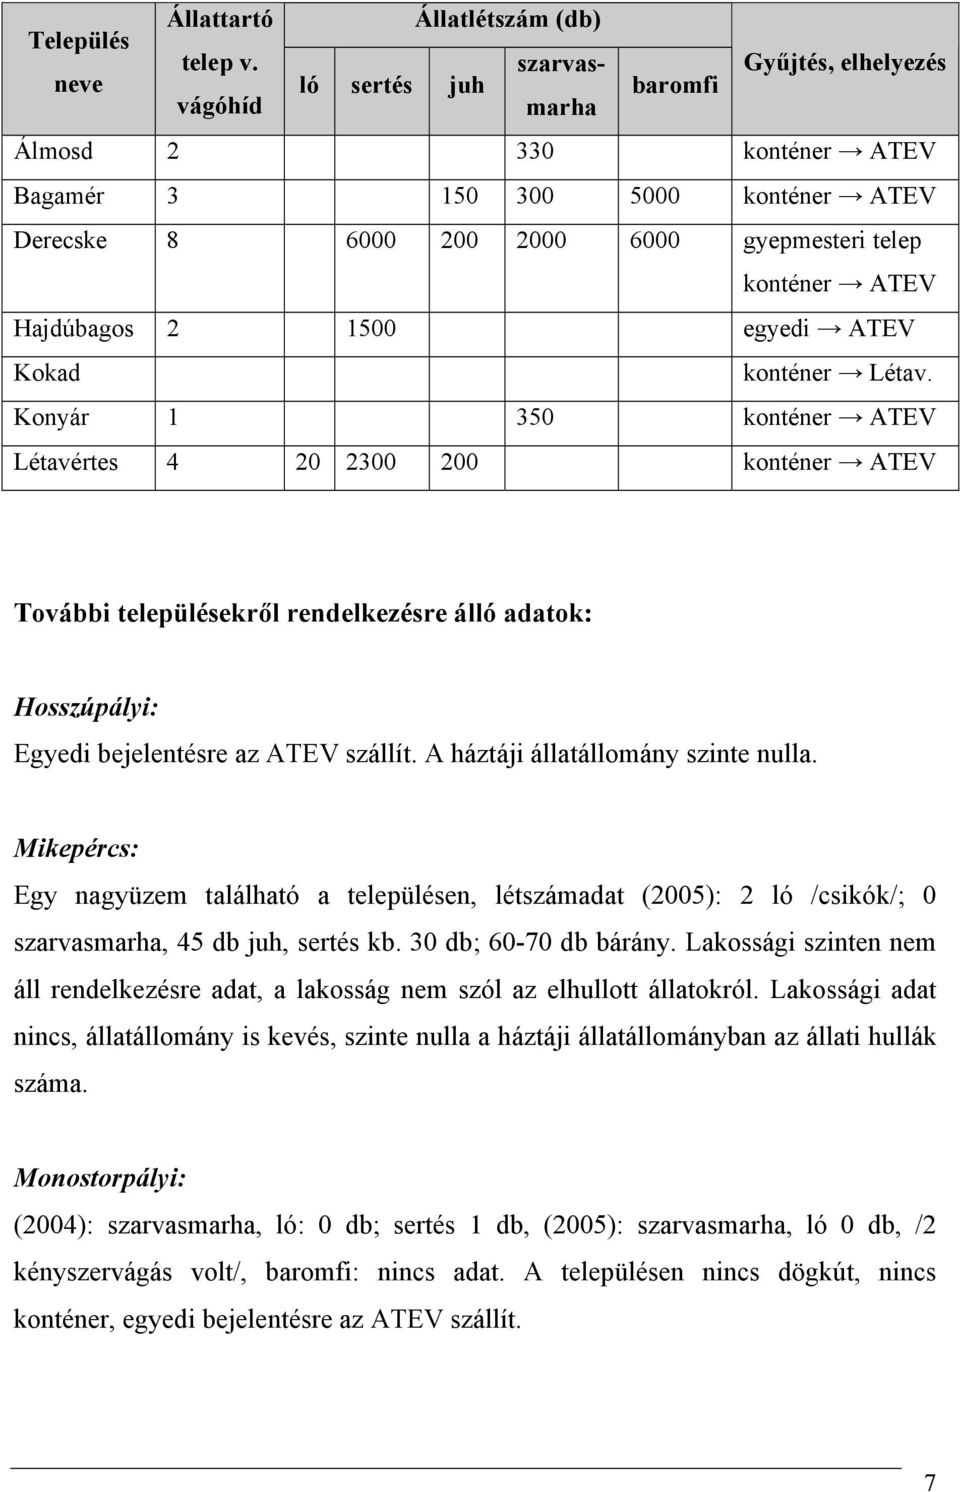 Hajdúbagos 2 1500 egyedi ATEV Kokad konténer Létav.